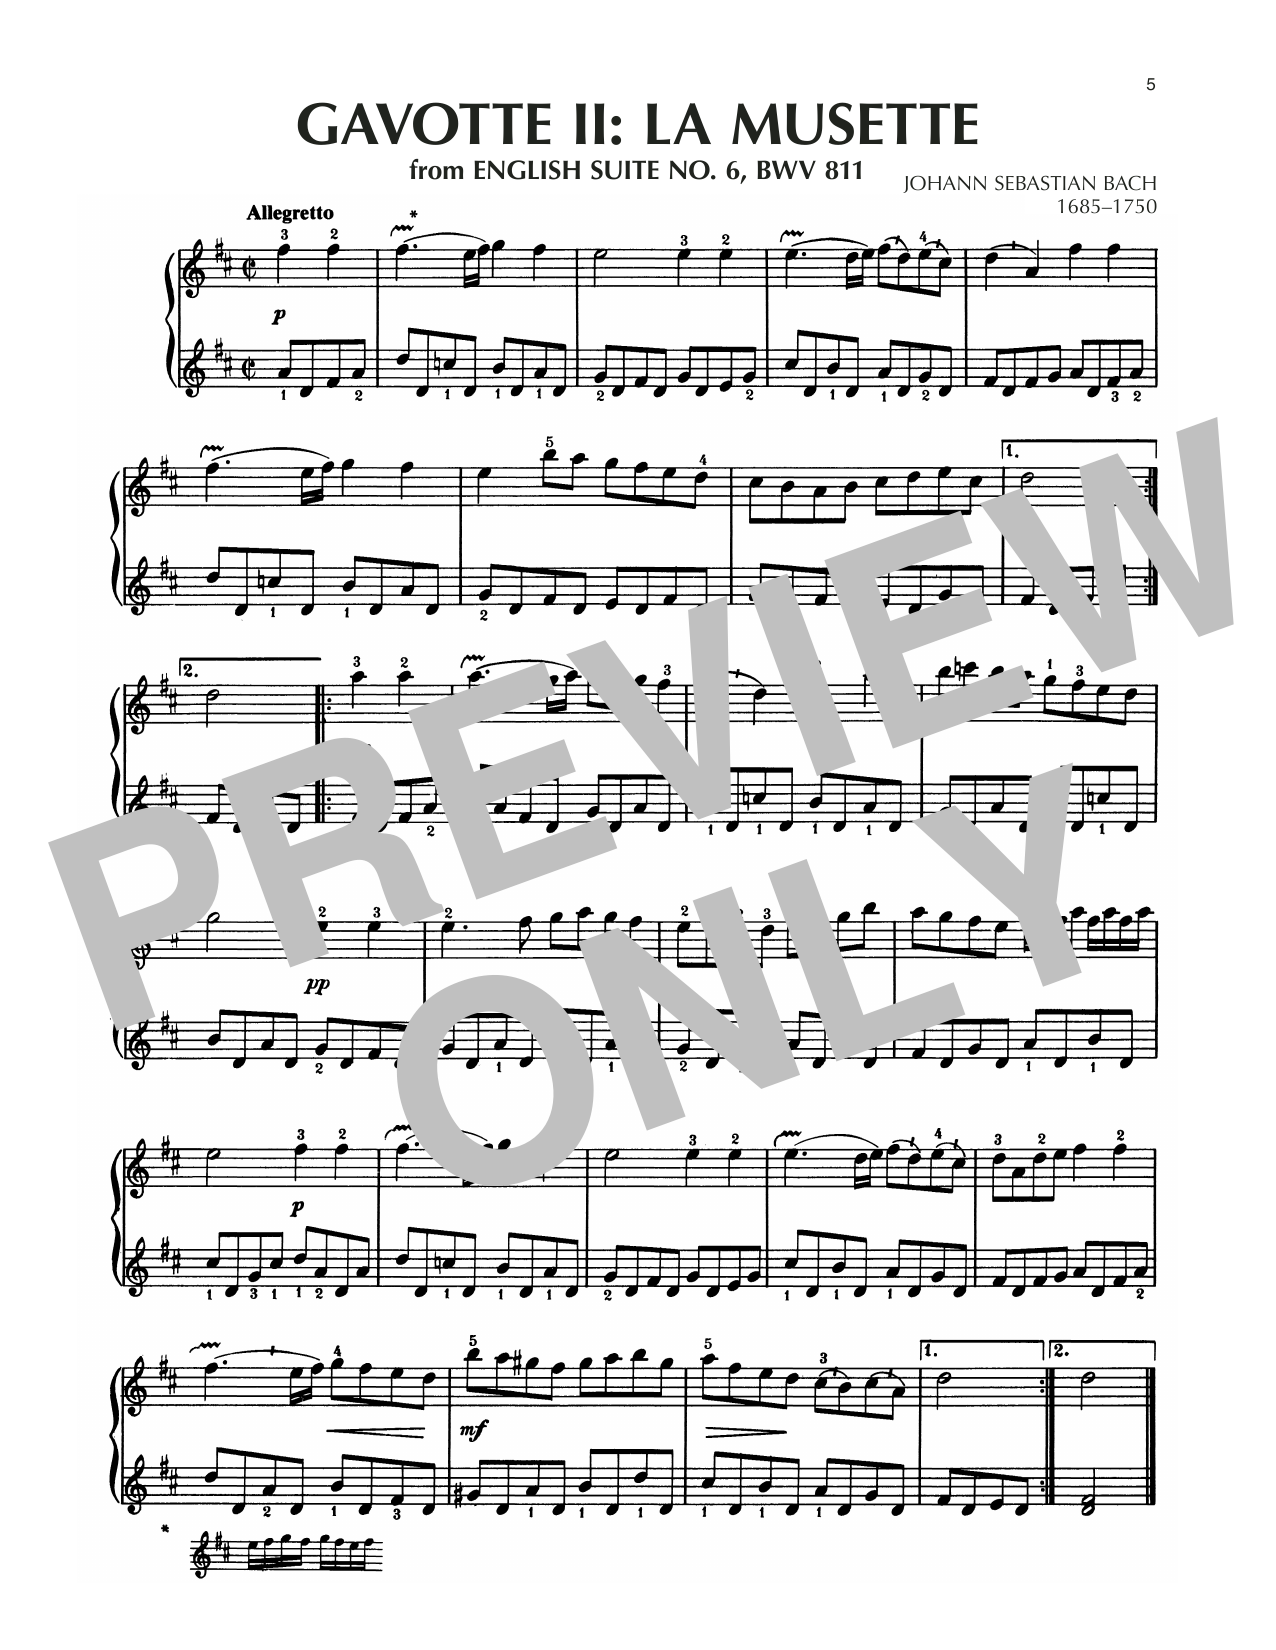 Johann Sebastian Bach Gavotte II In D Major, BWV 811 Sheet Music Notes & Chords for Piano Solo - Download or Print PDF